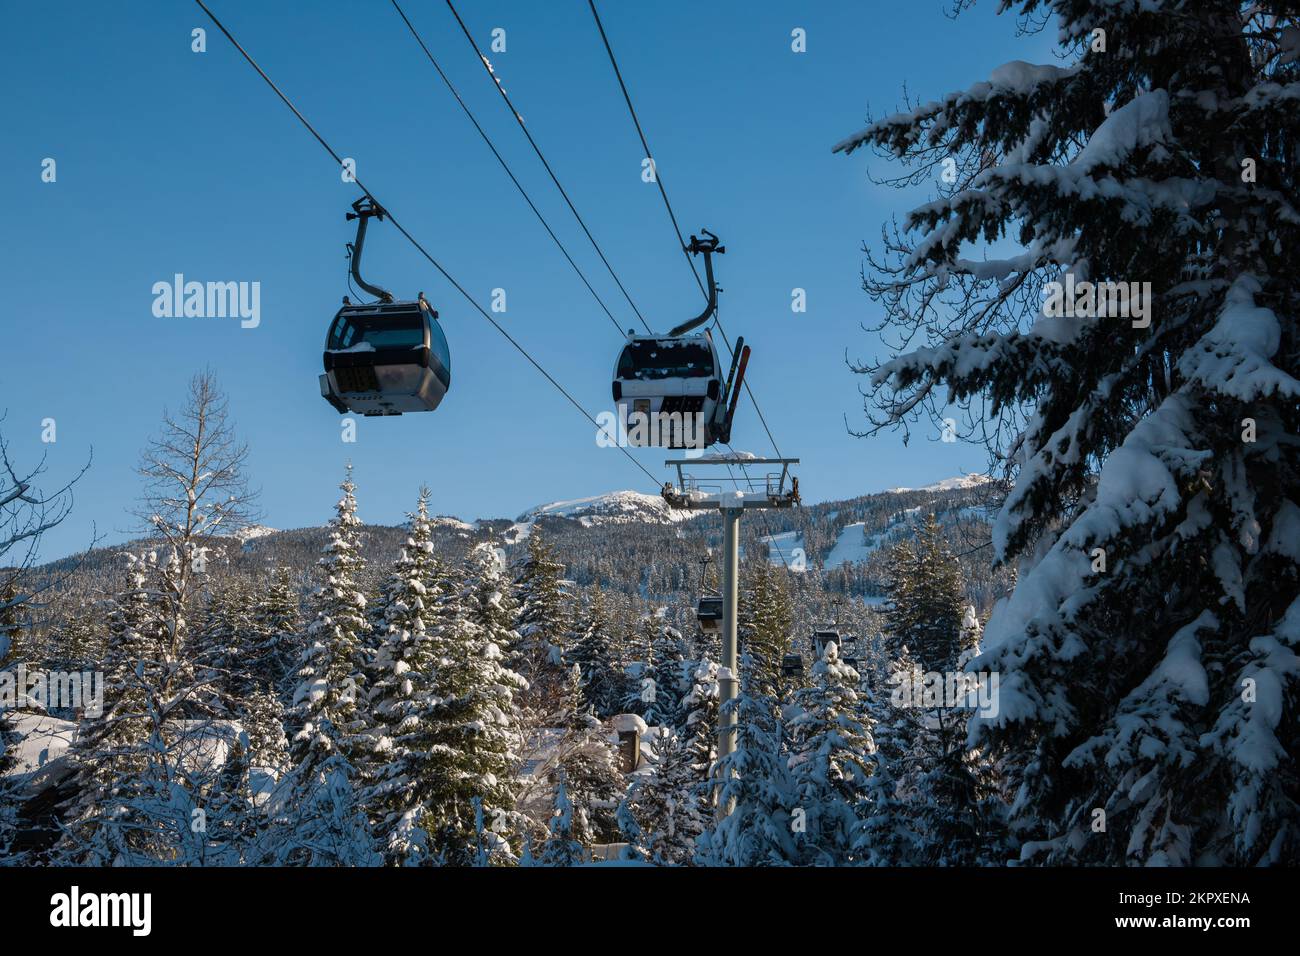 Ski resort - winter season - sky gondola, ski lift. Snowboarding, Sunny day, pure snow, forest pine trees, mountain peaks view. Winter olympic games. Stock Photo